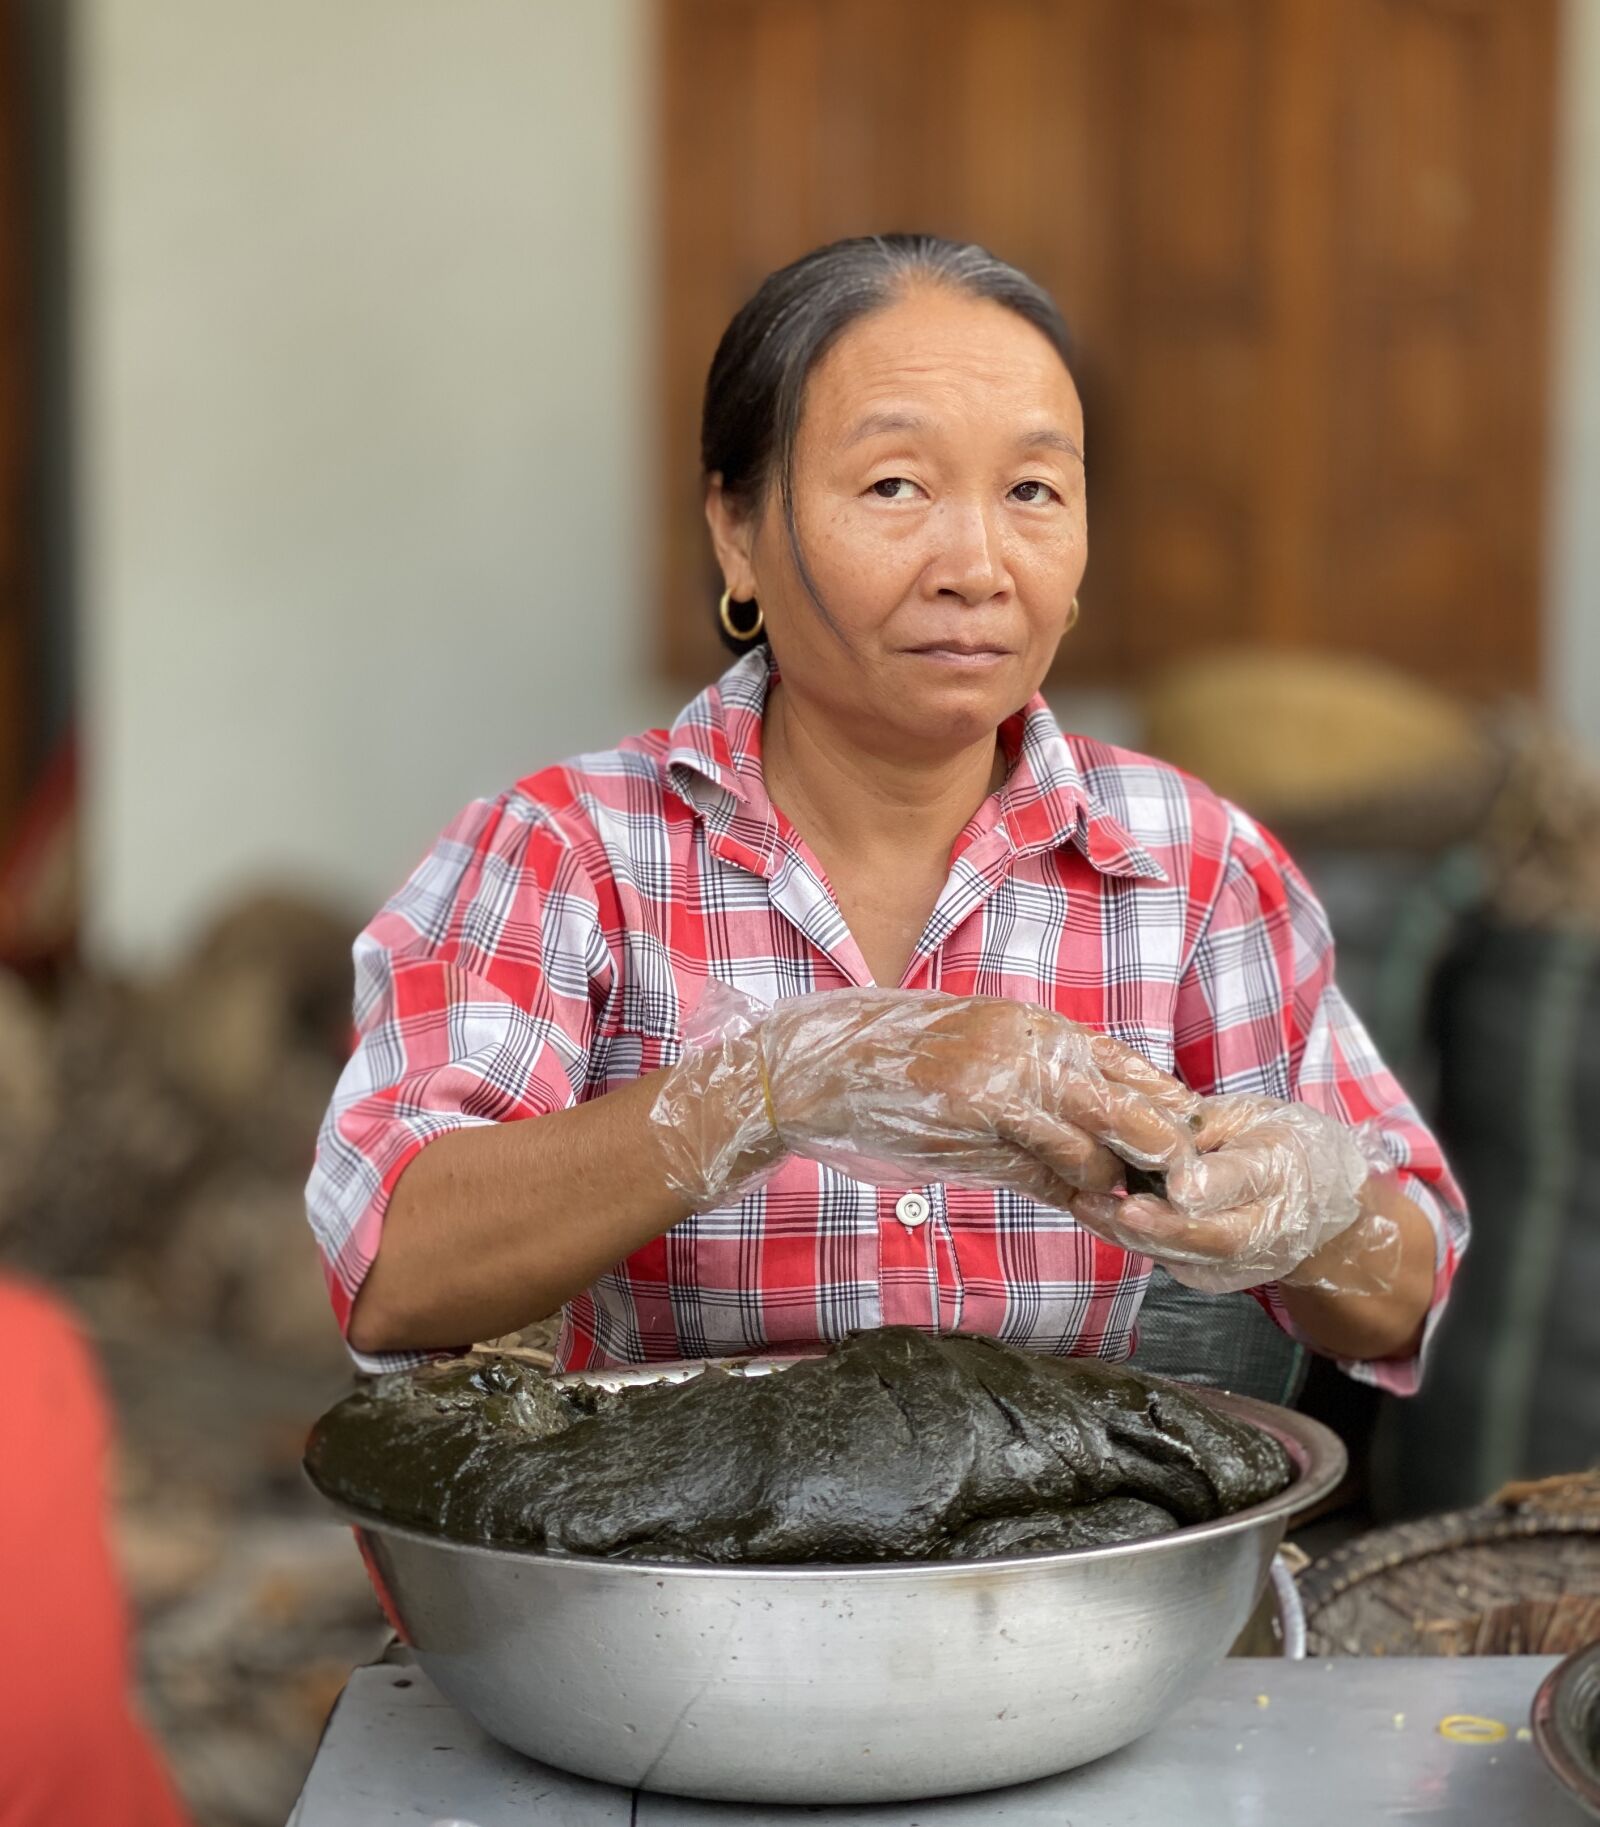 Apple iPhone 11 Pro sample photo. Woman, vietnam, food preparation photography